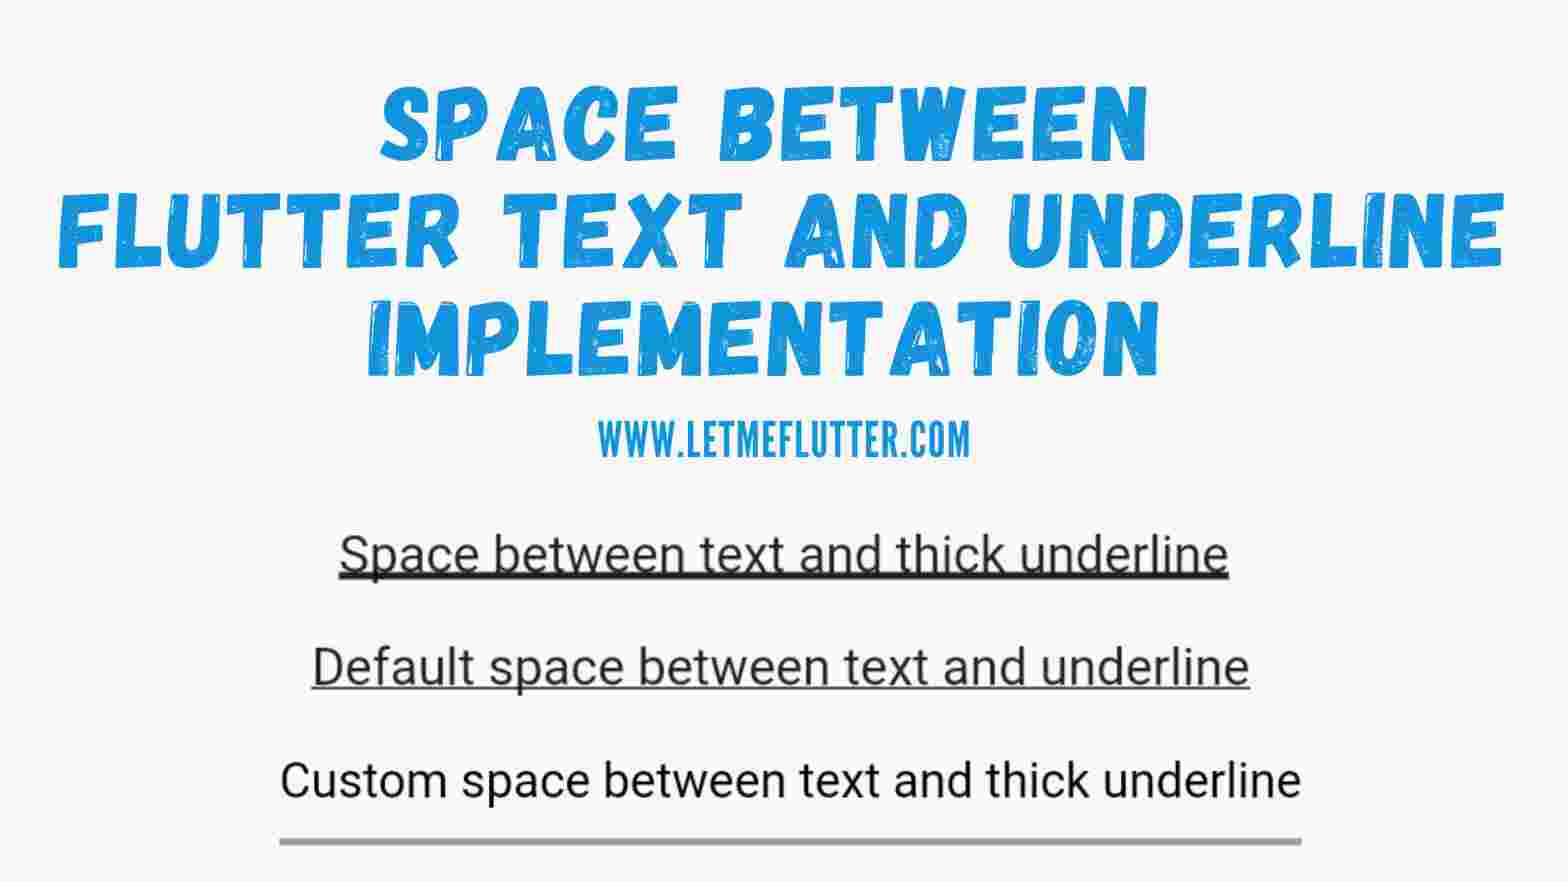 Space between Flutter text and underline